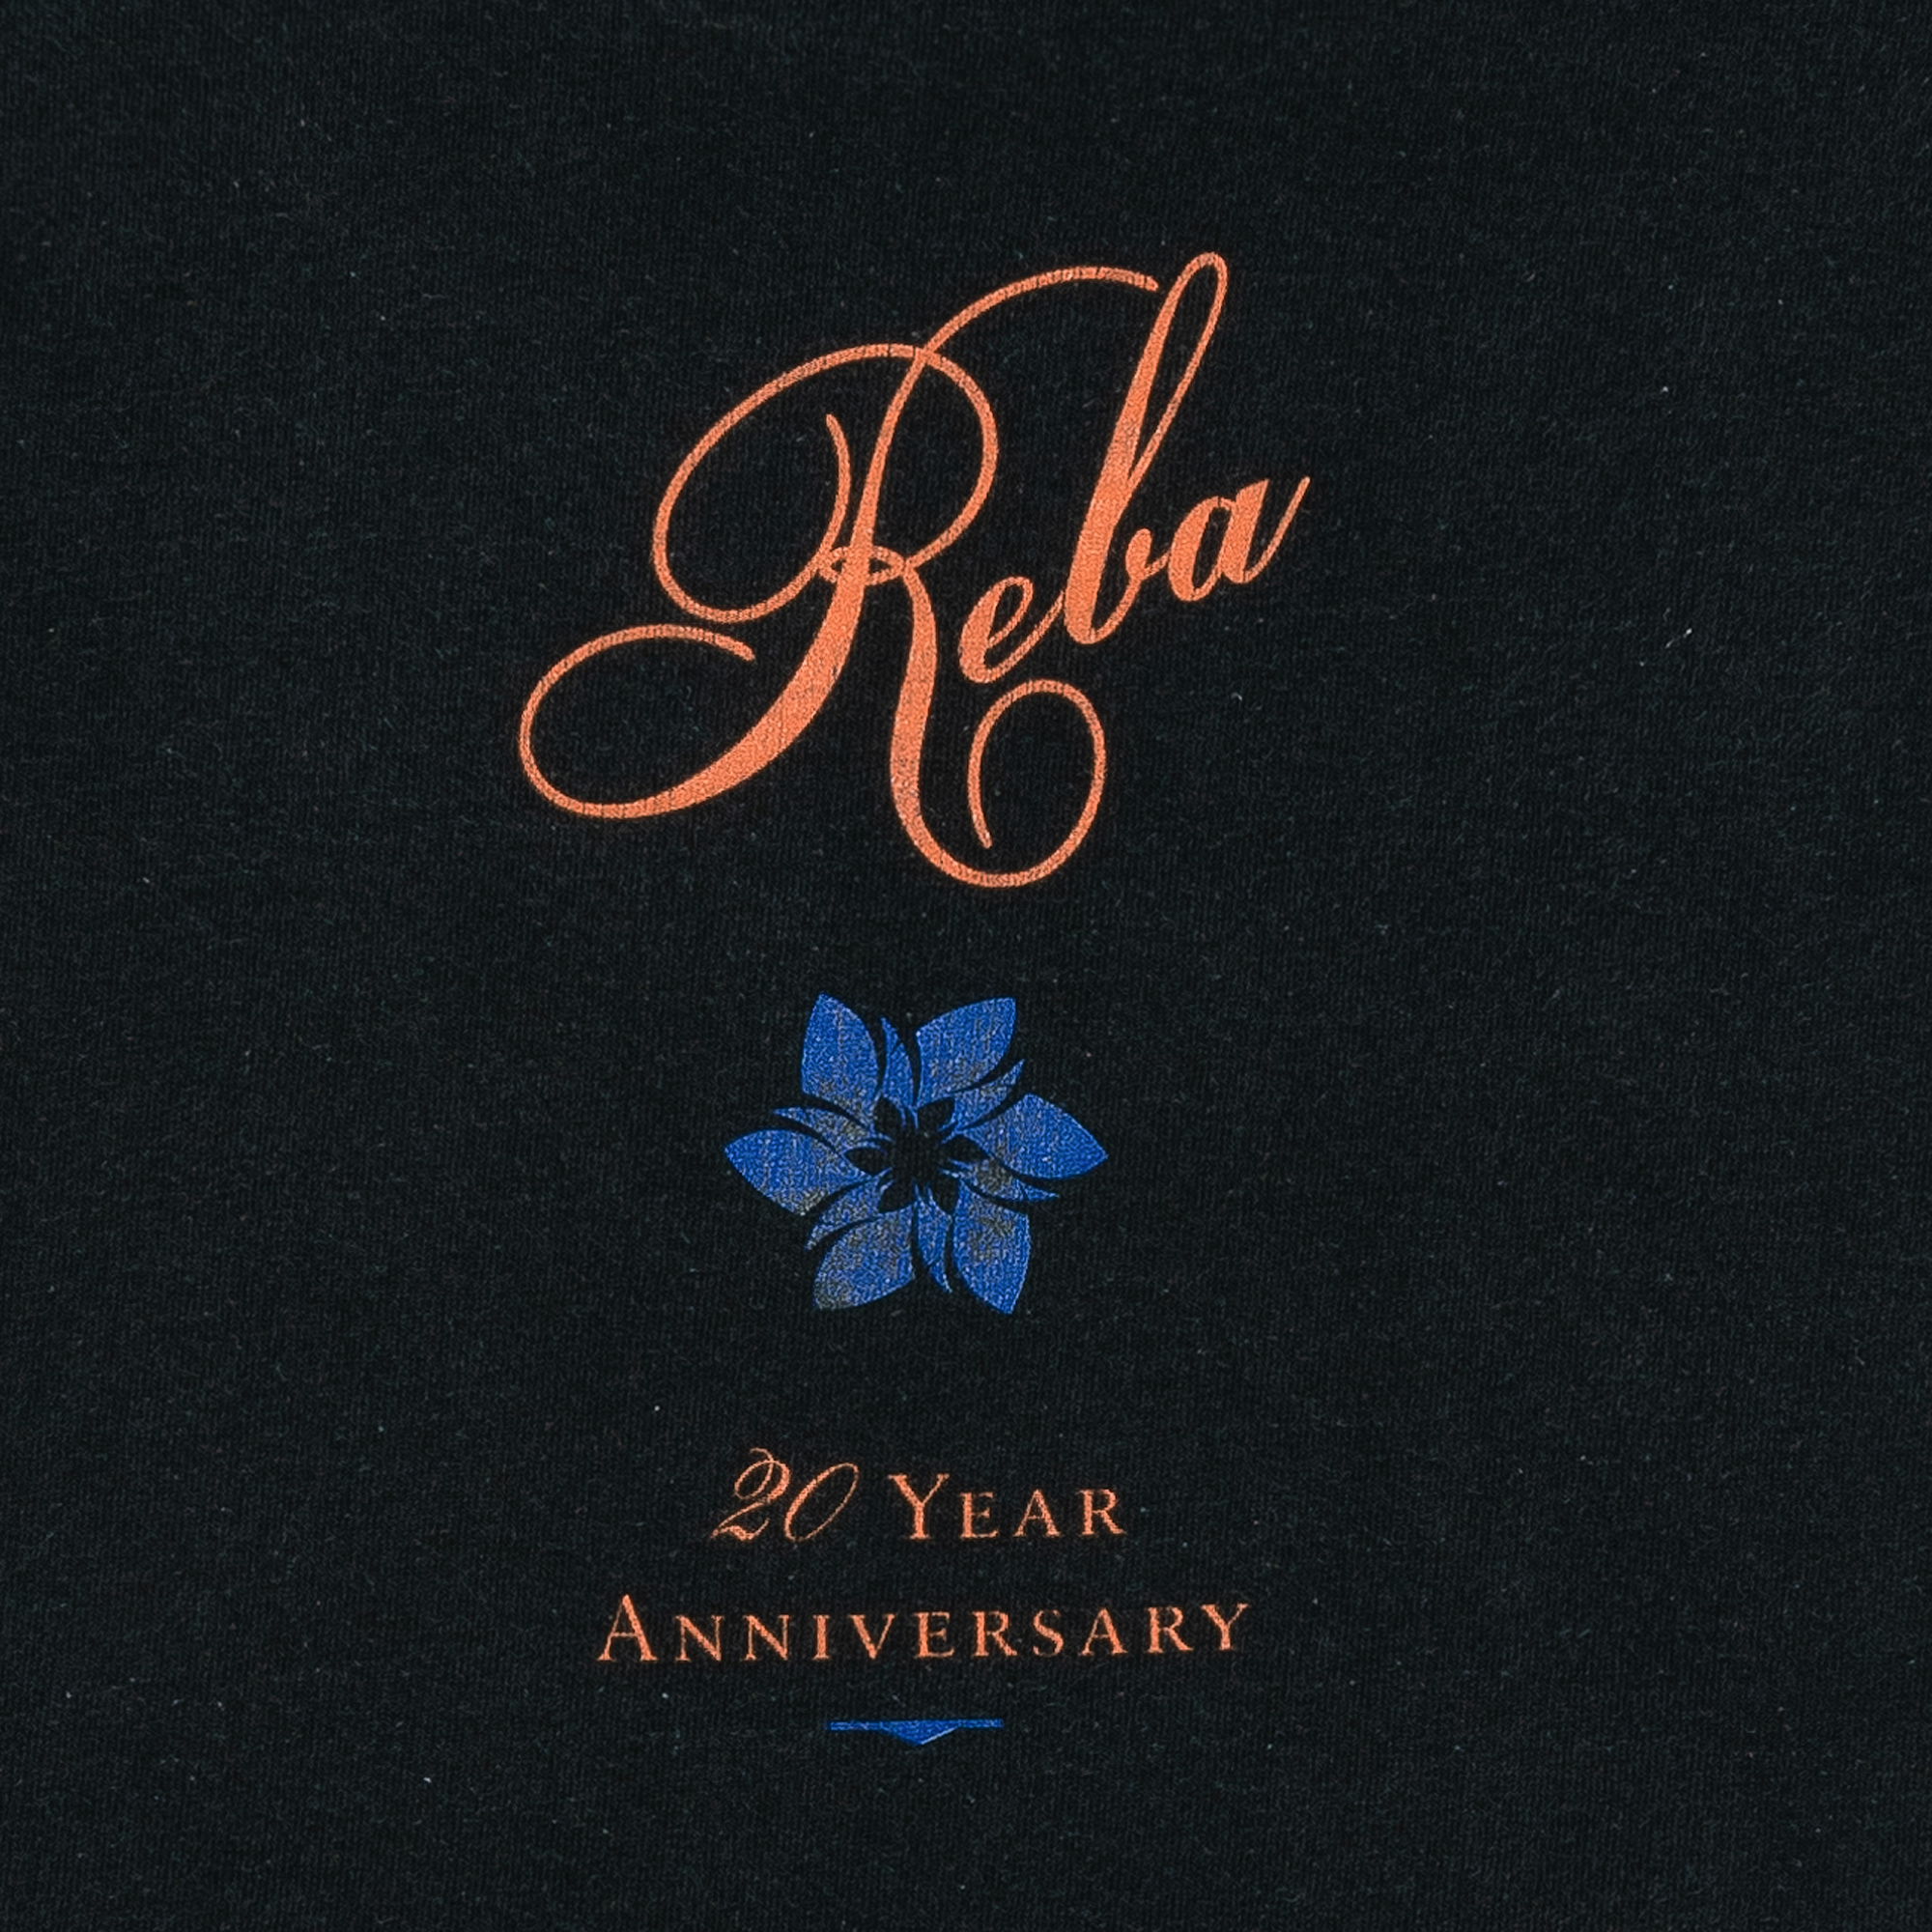 Reba Big Face 20 Year Anniversary Image Works Tee Black-PLUS